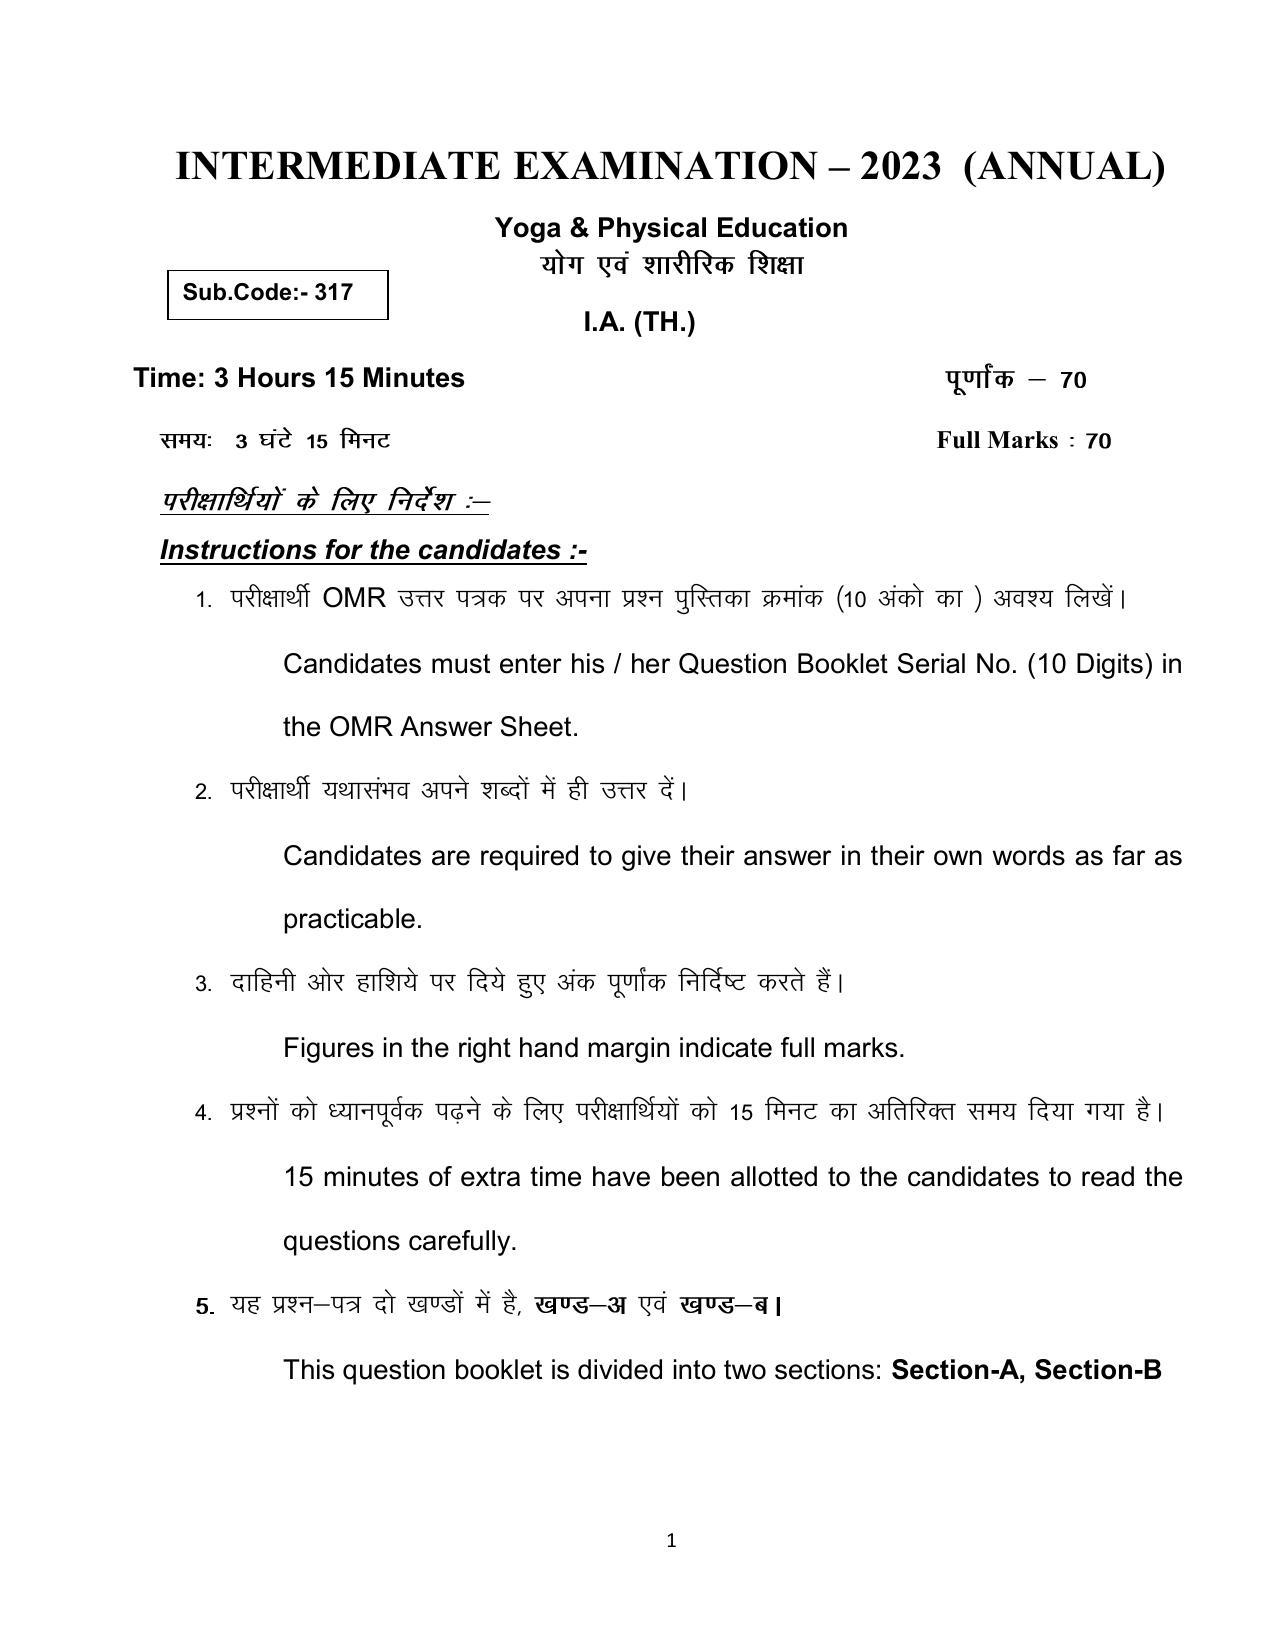 Bihar Board Class 12 Yoga Model Paper - Page 1